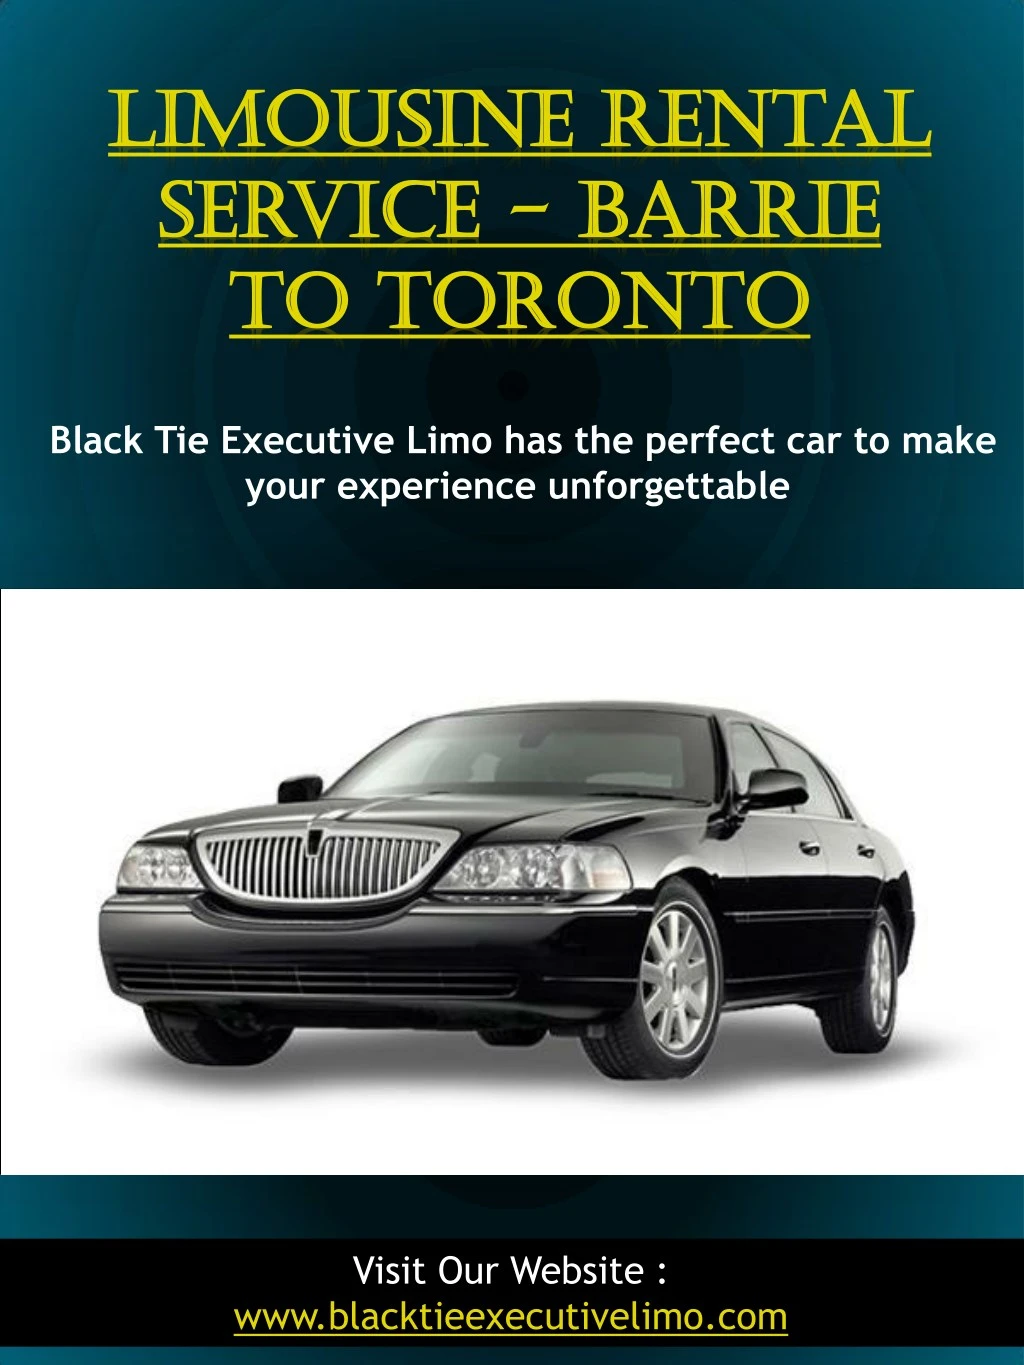 limousine rental limousine rental service service